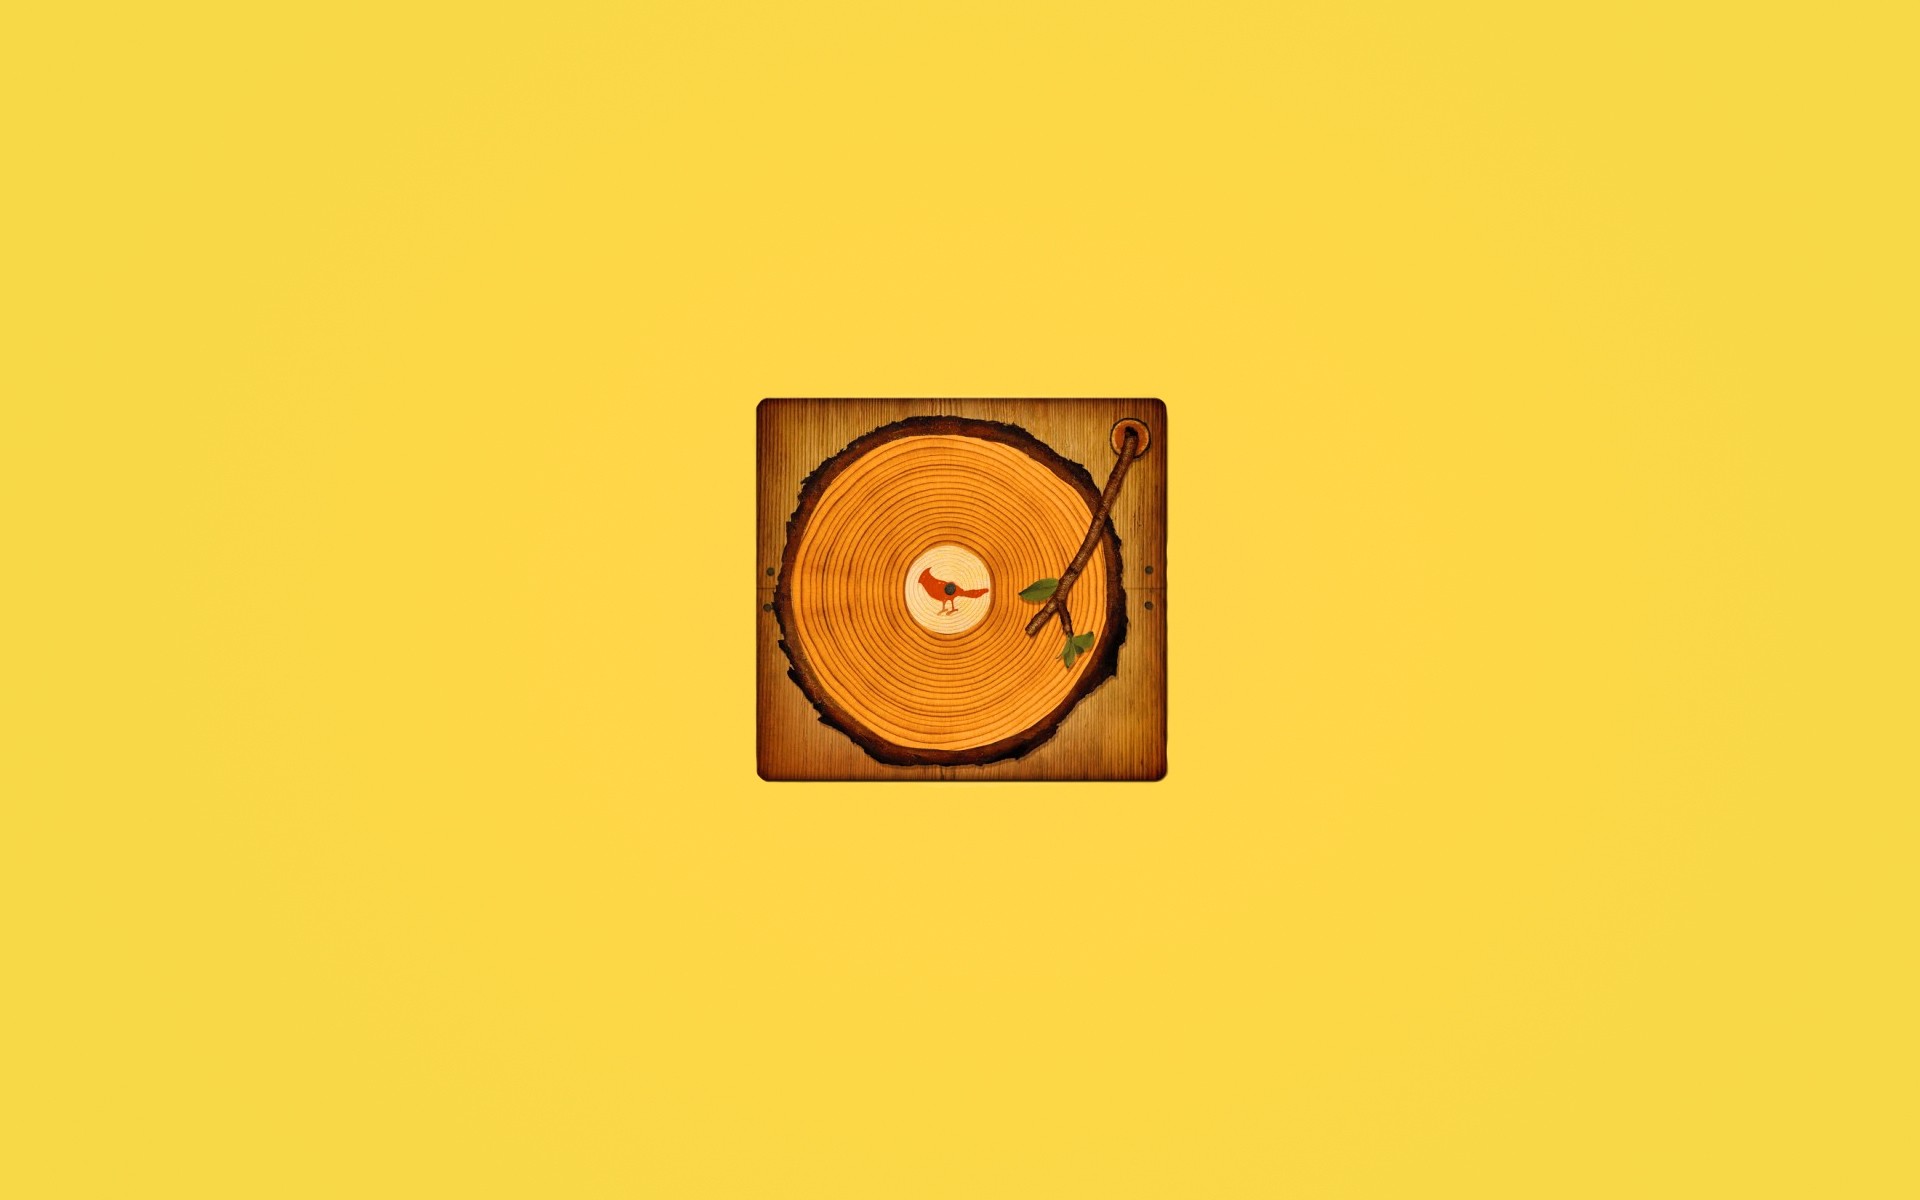 minimalism desktop design image illustration art abstract color graphic gold decoration element wood plate